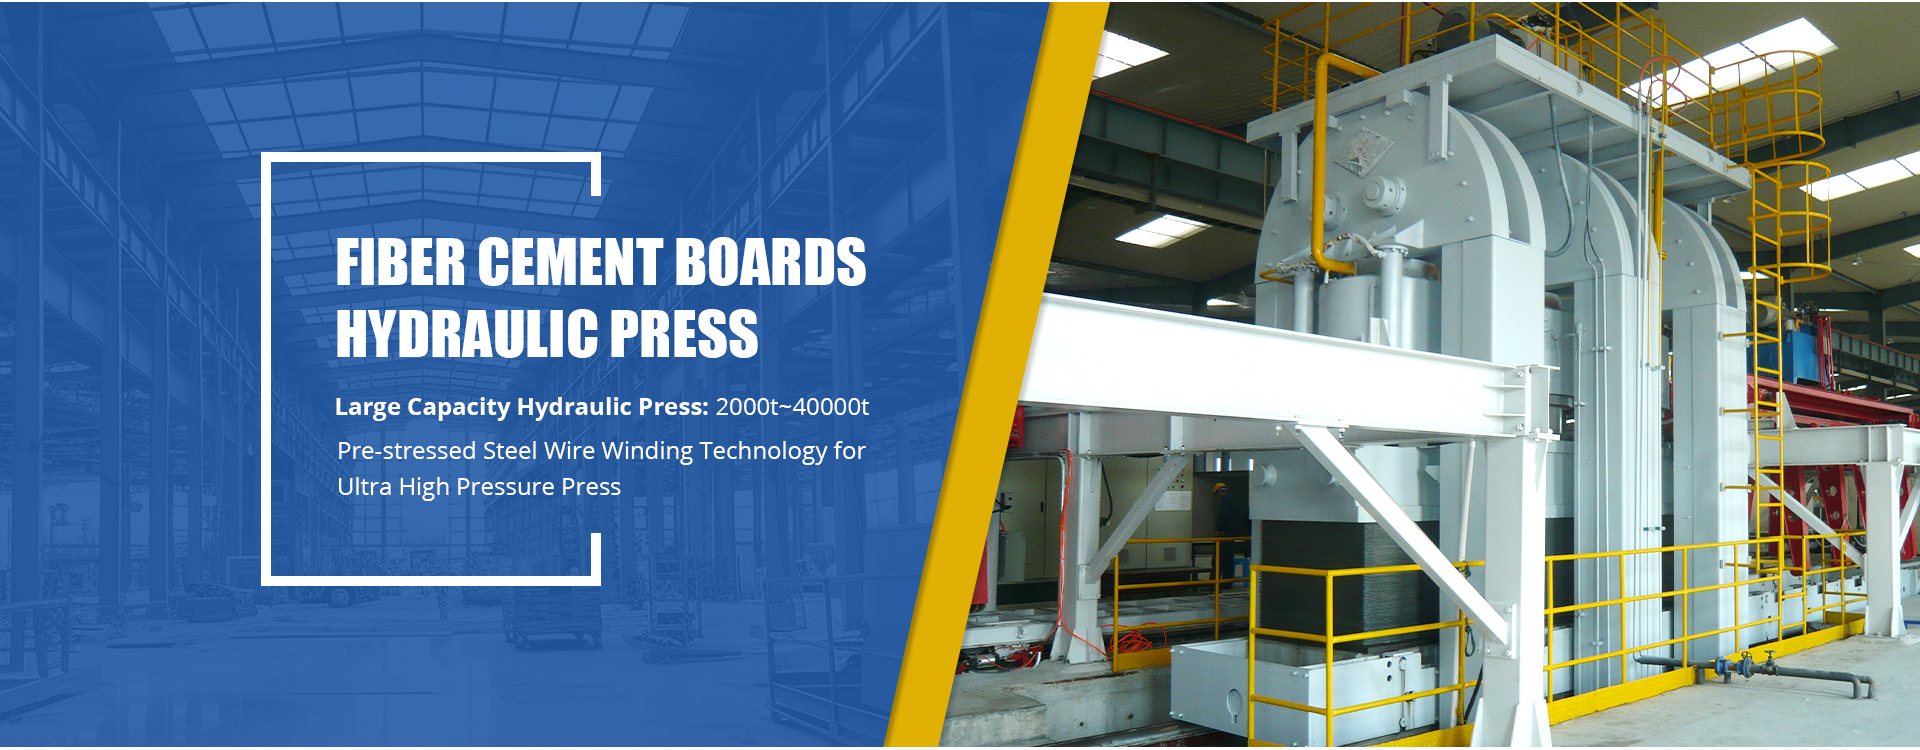 Fiber Cement Boards Forming Press